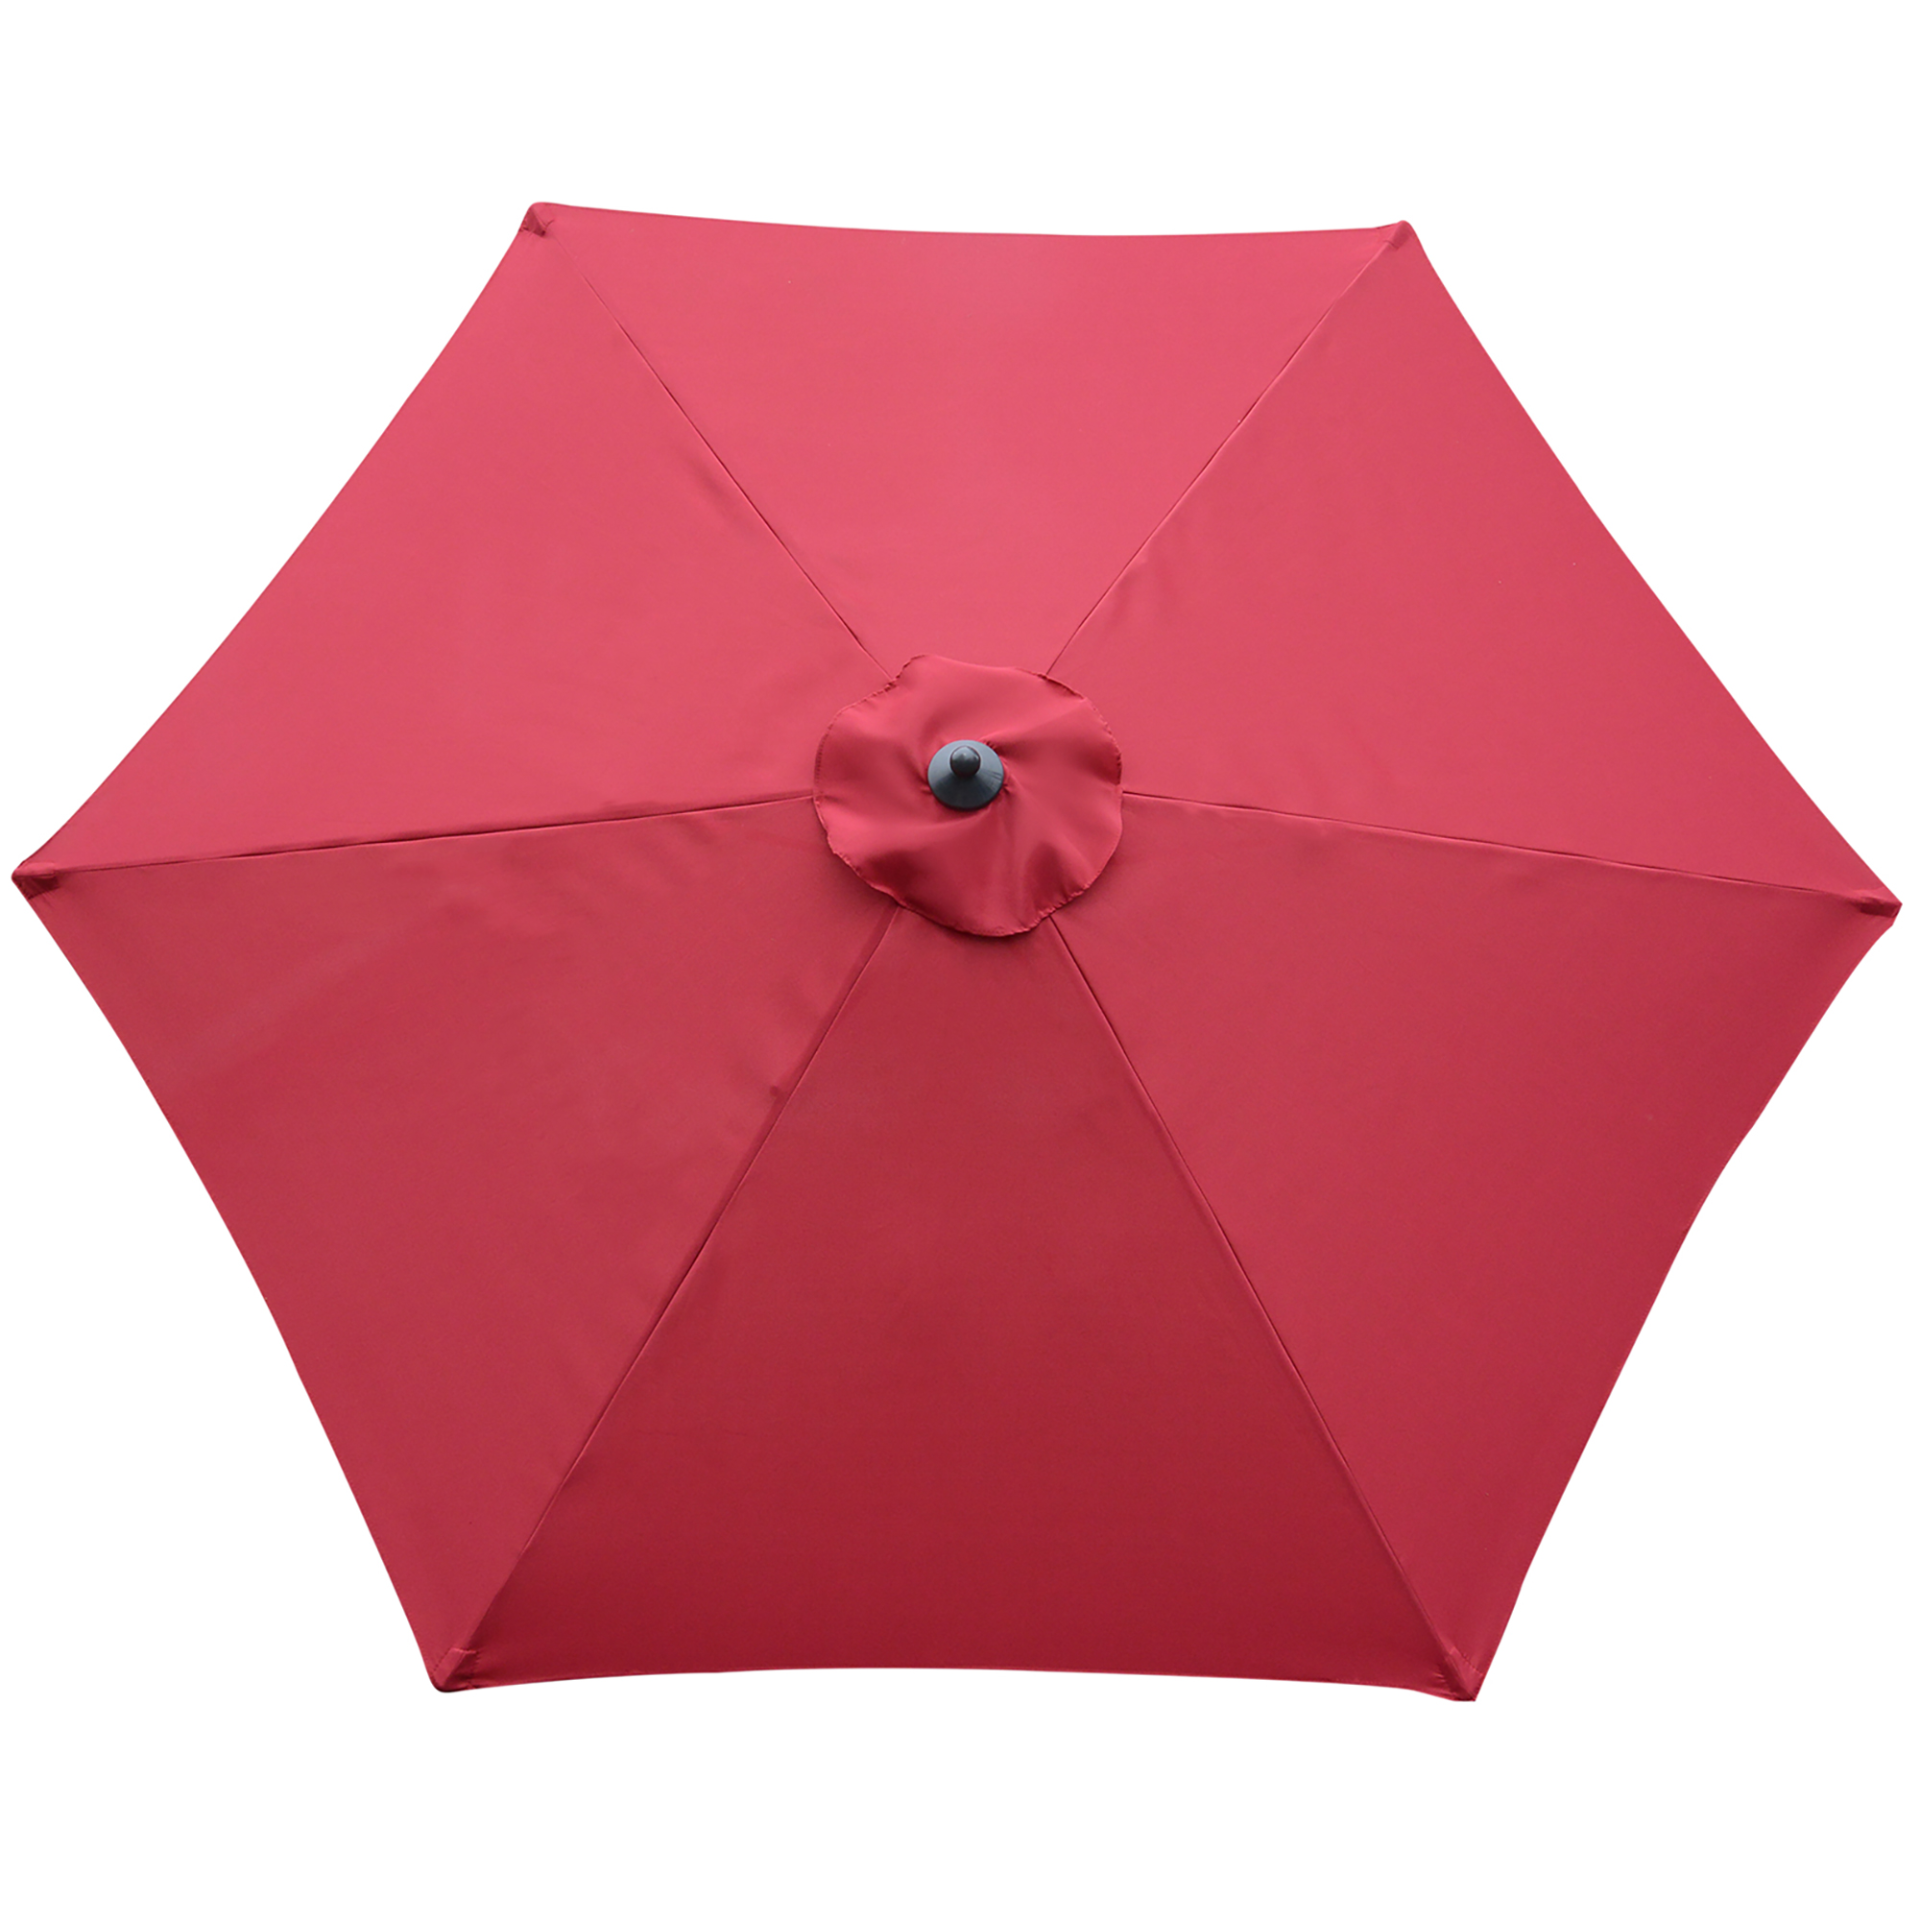 Outsunny 2.8m Patio Parasols Umbrellas Outdoor 6 Ribs Sunshade Canopy Manual Push Garden Backyard Furniture, Wine Red